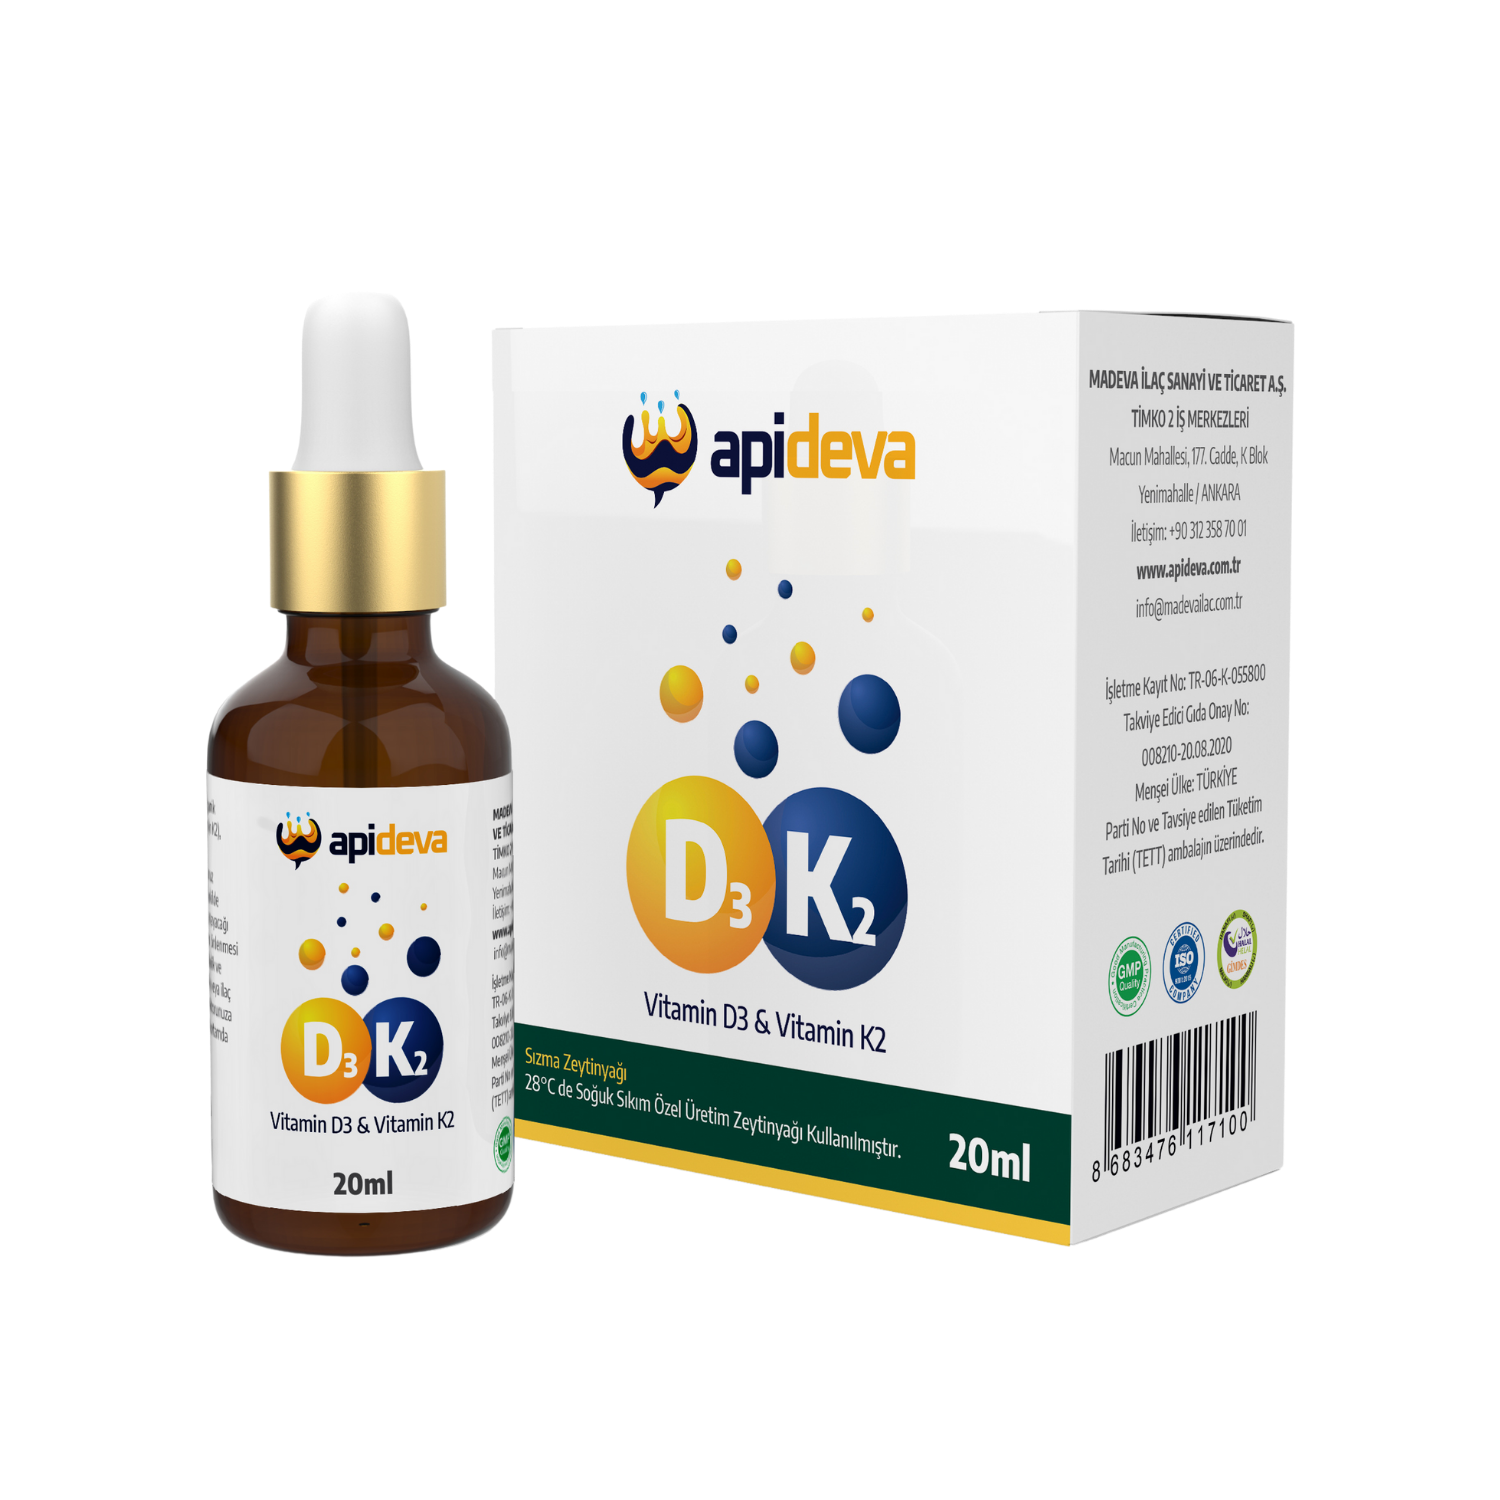 Apideva D3 K2 Vitamini 20 ml.